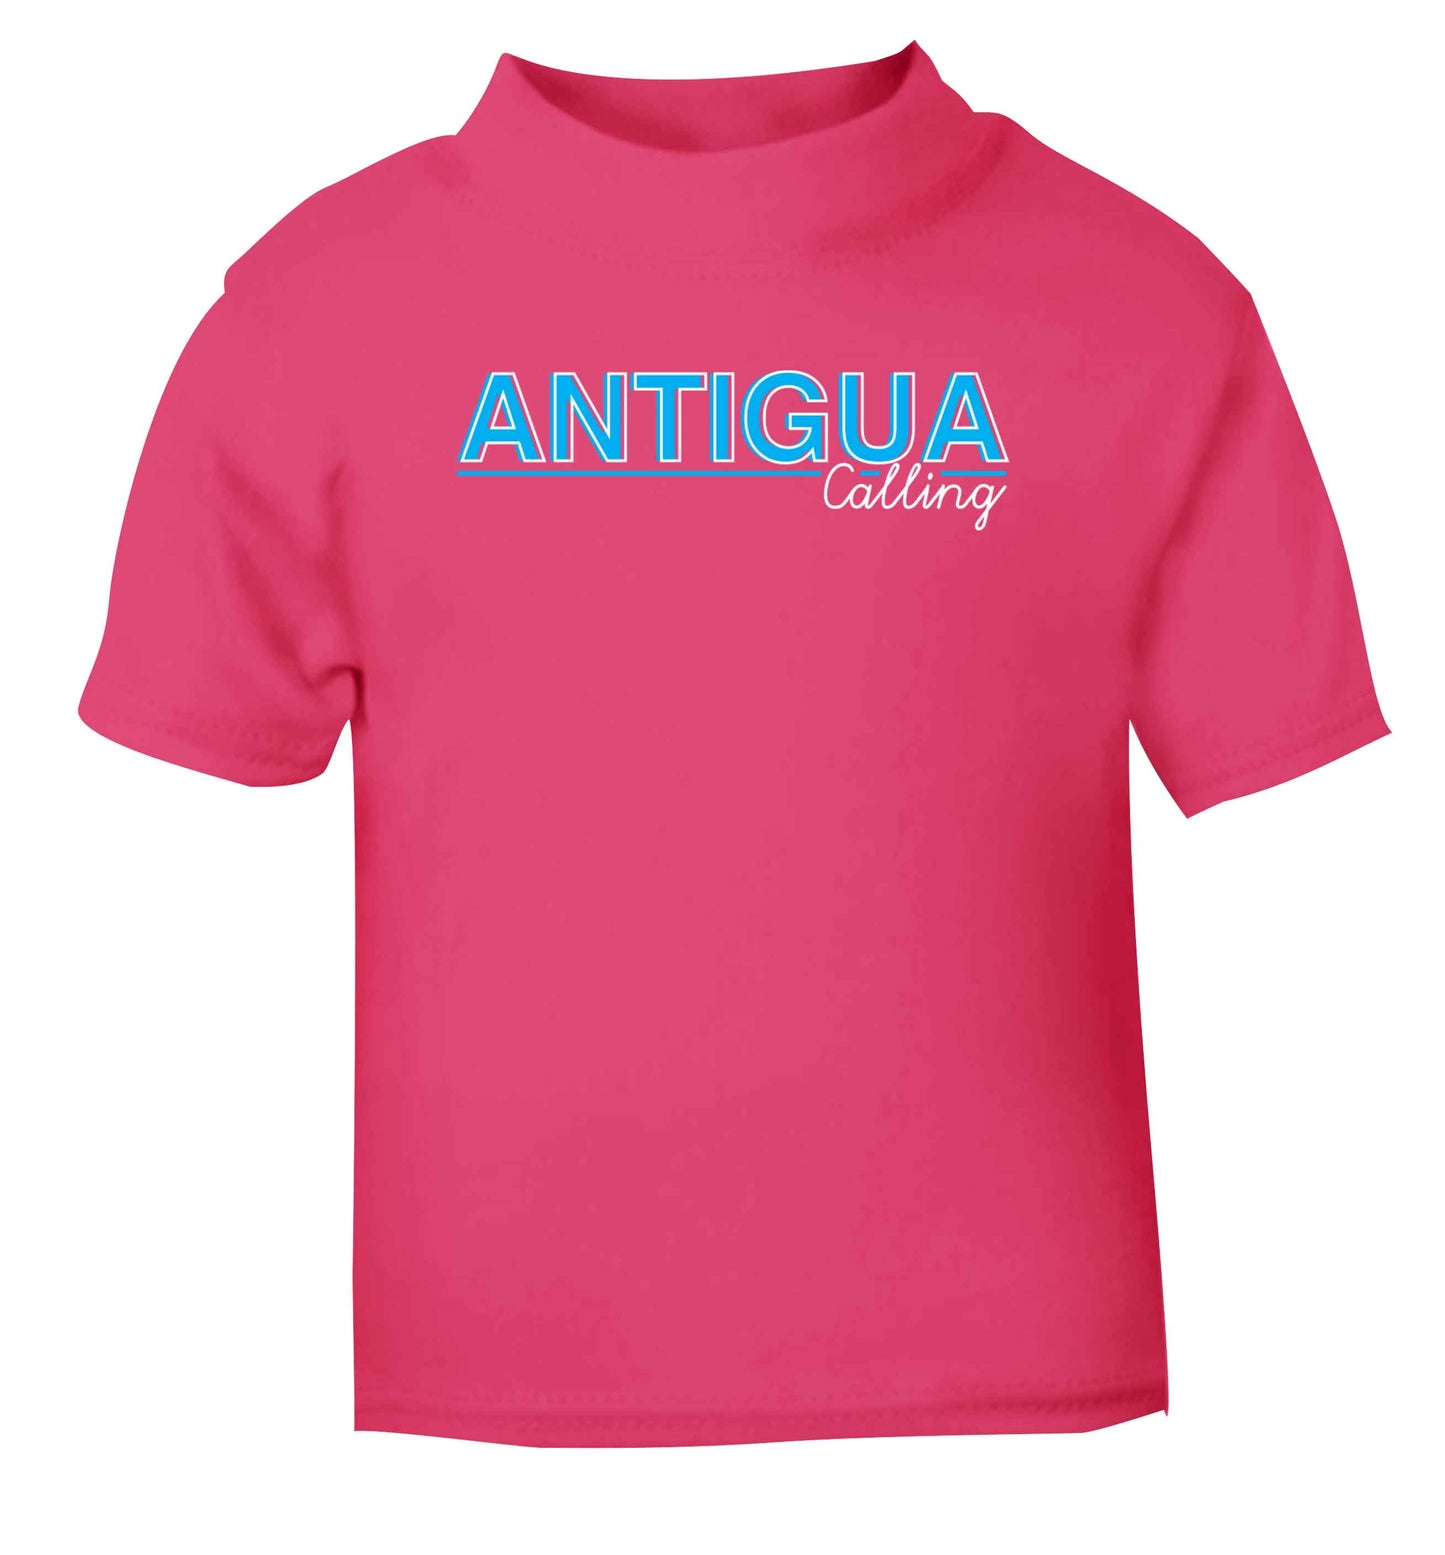 Antigua calling pink Baby Toddler Tshirt 2 Years